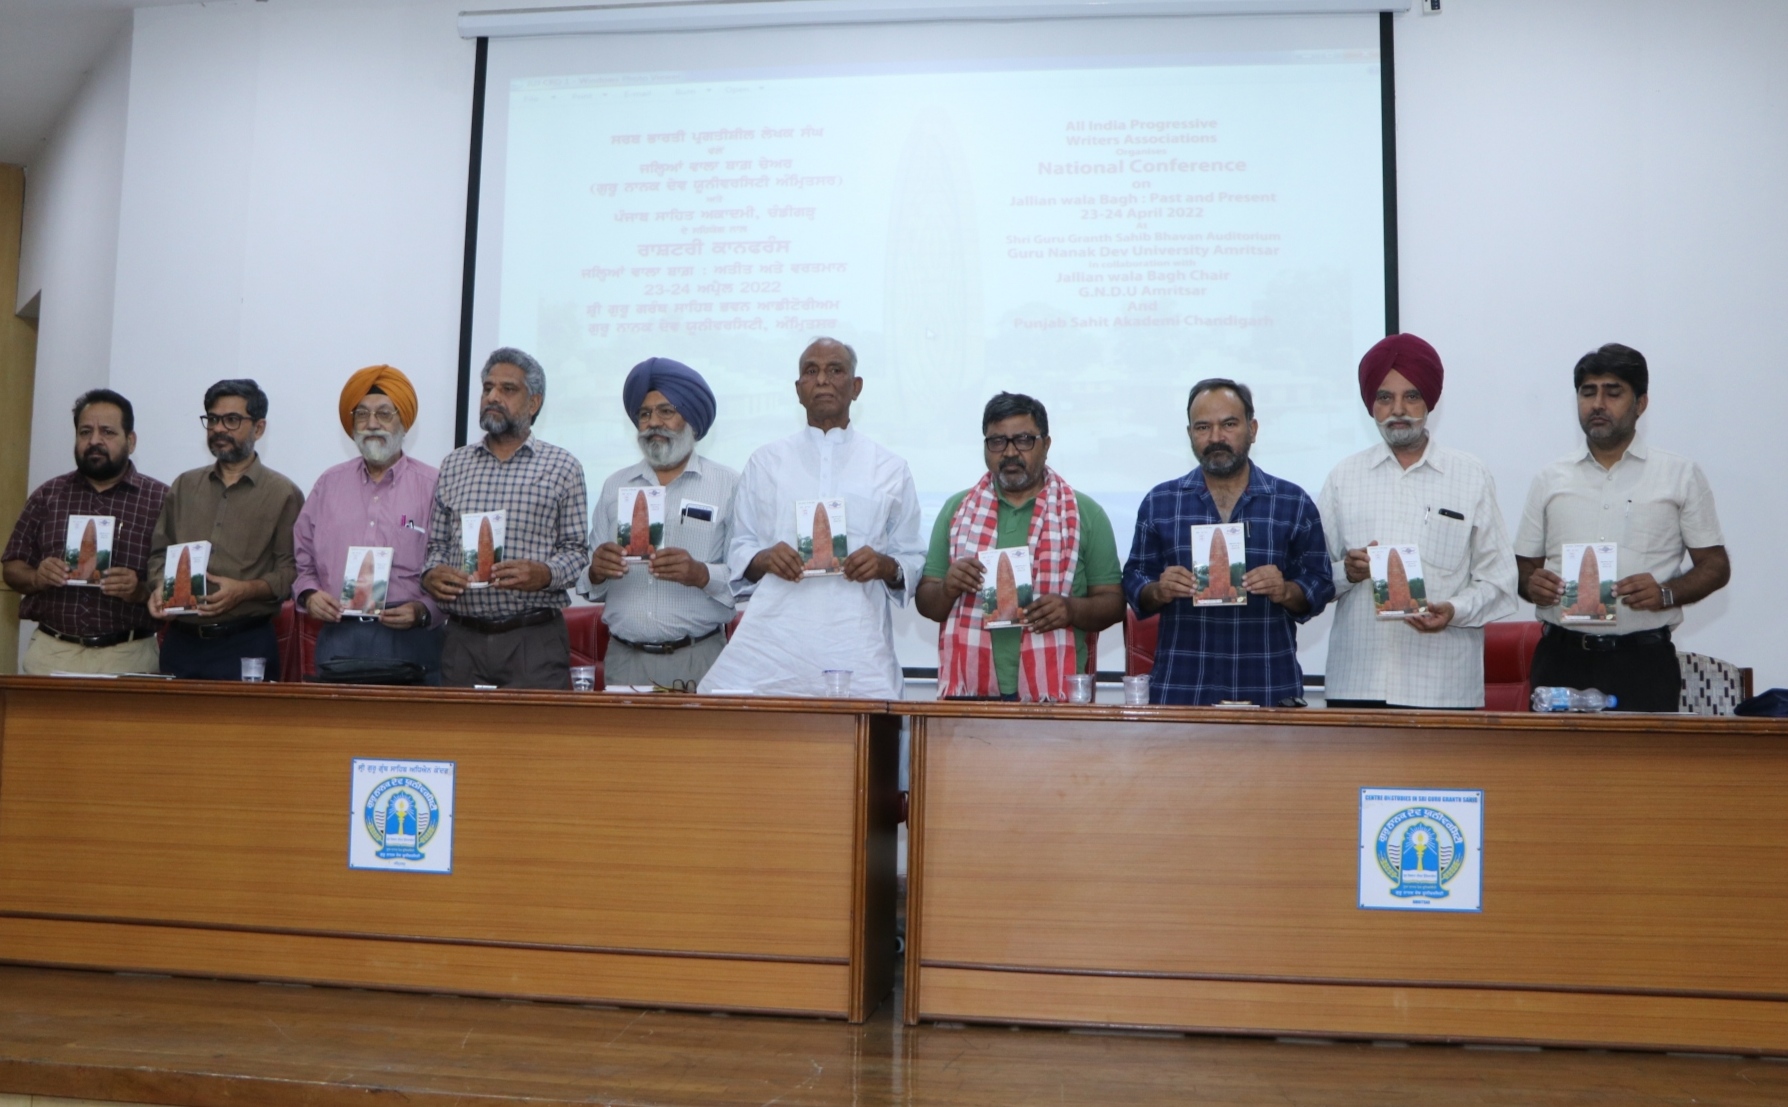 Jallianwala Bagh conference: 'Preserve heritage of Indian freedom struggle’